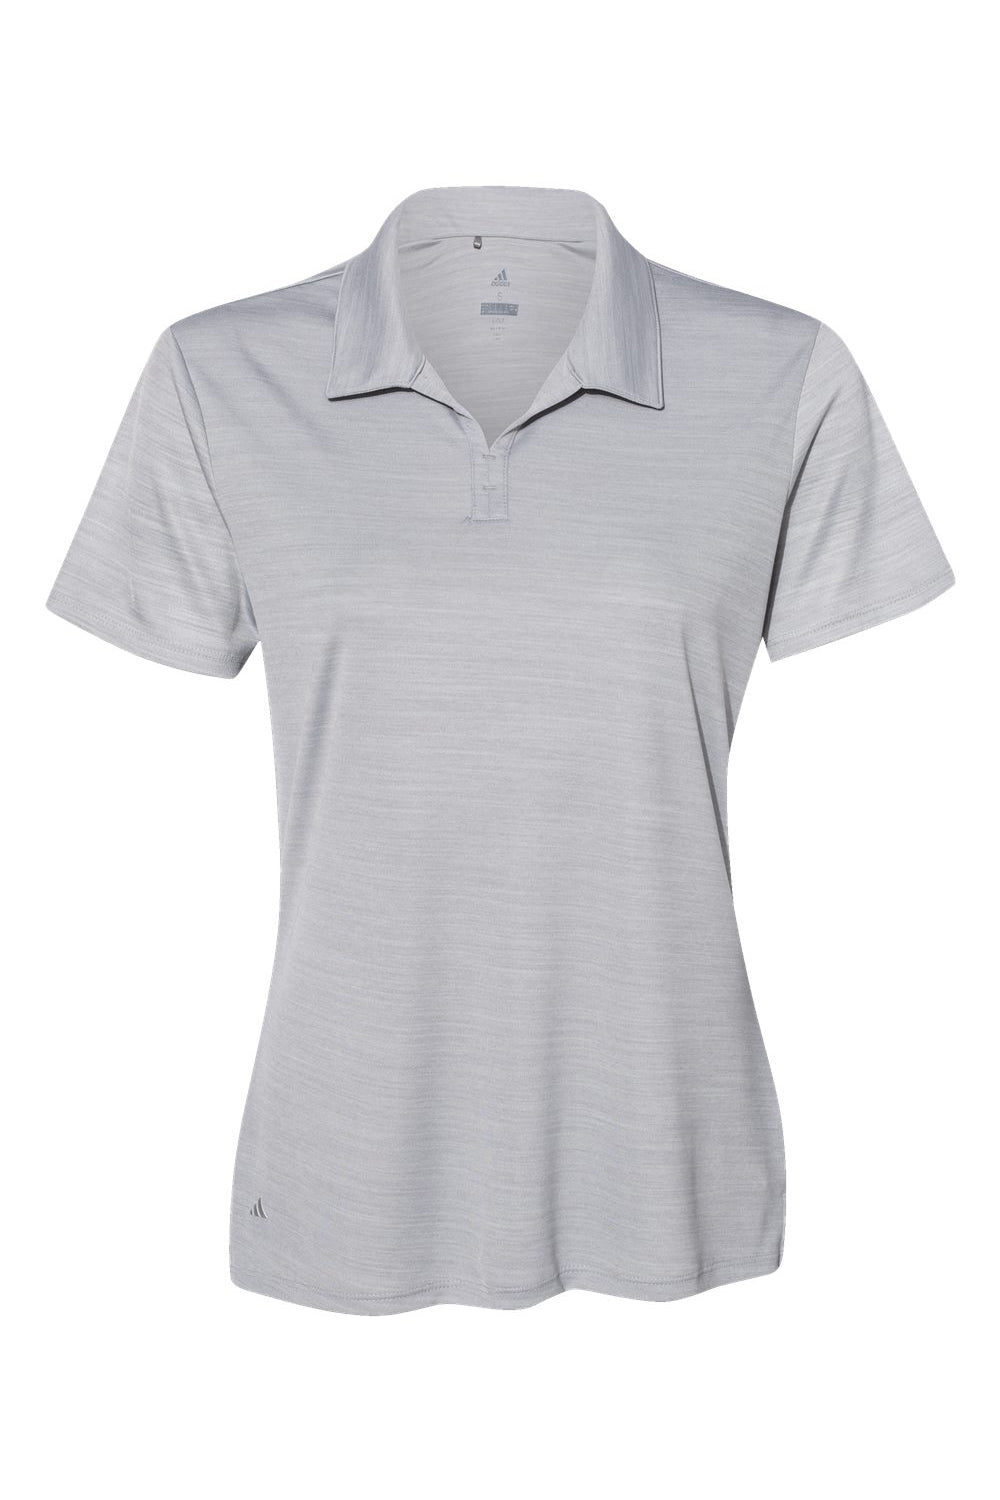 Adidas A403 Womens Melange Short Sleeve Polo Shirt Mid Grey Melange Flat Front